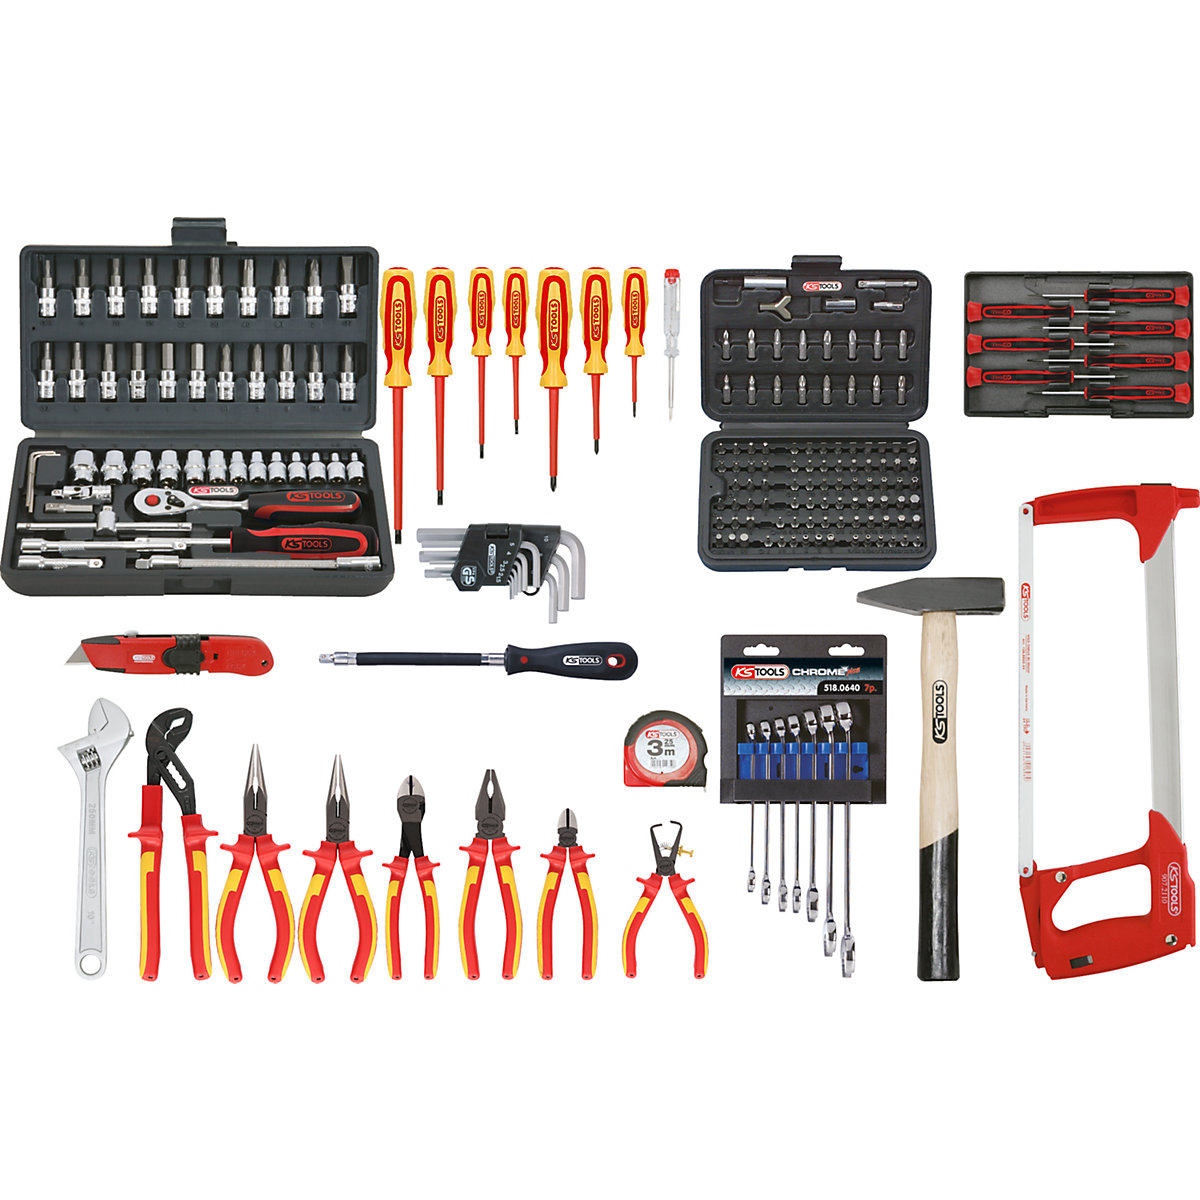 Premium electrician's max tool kit – KS Tools